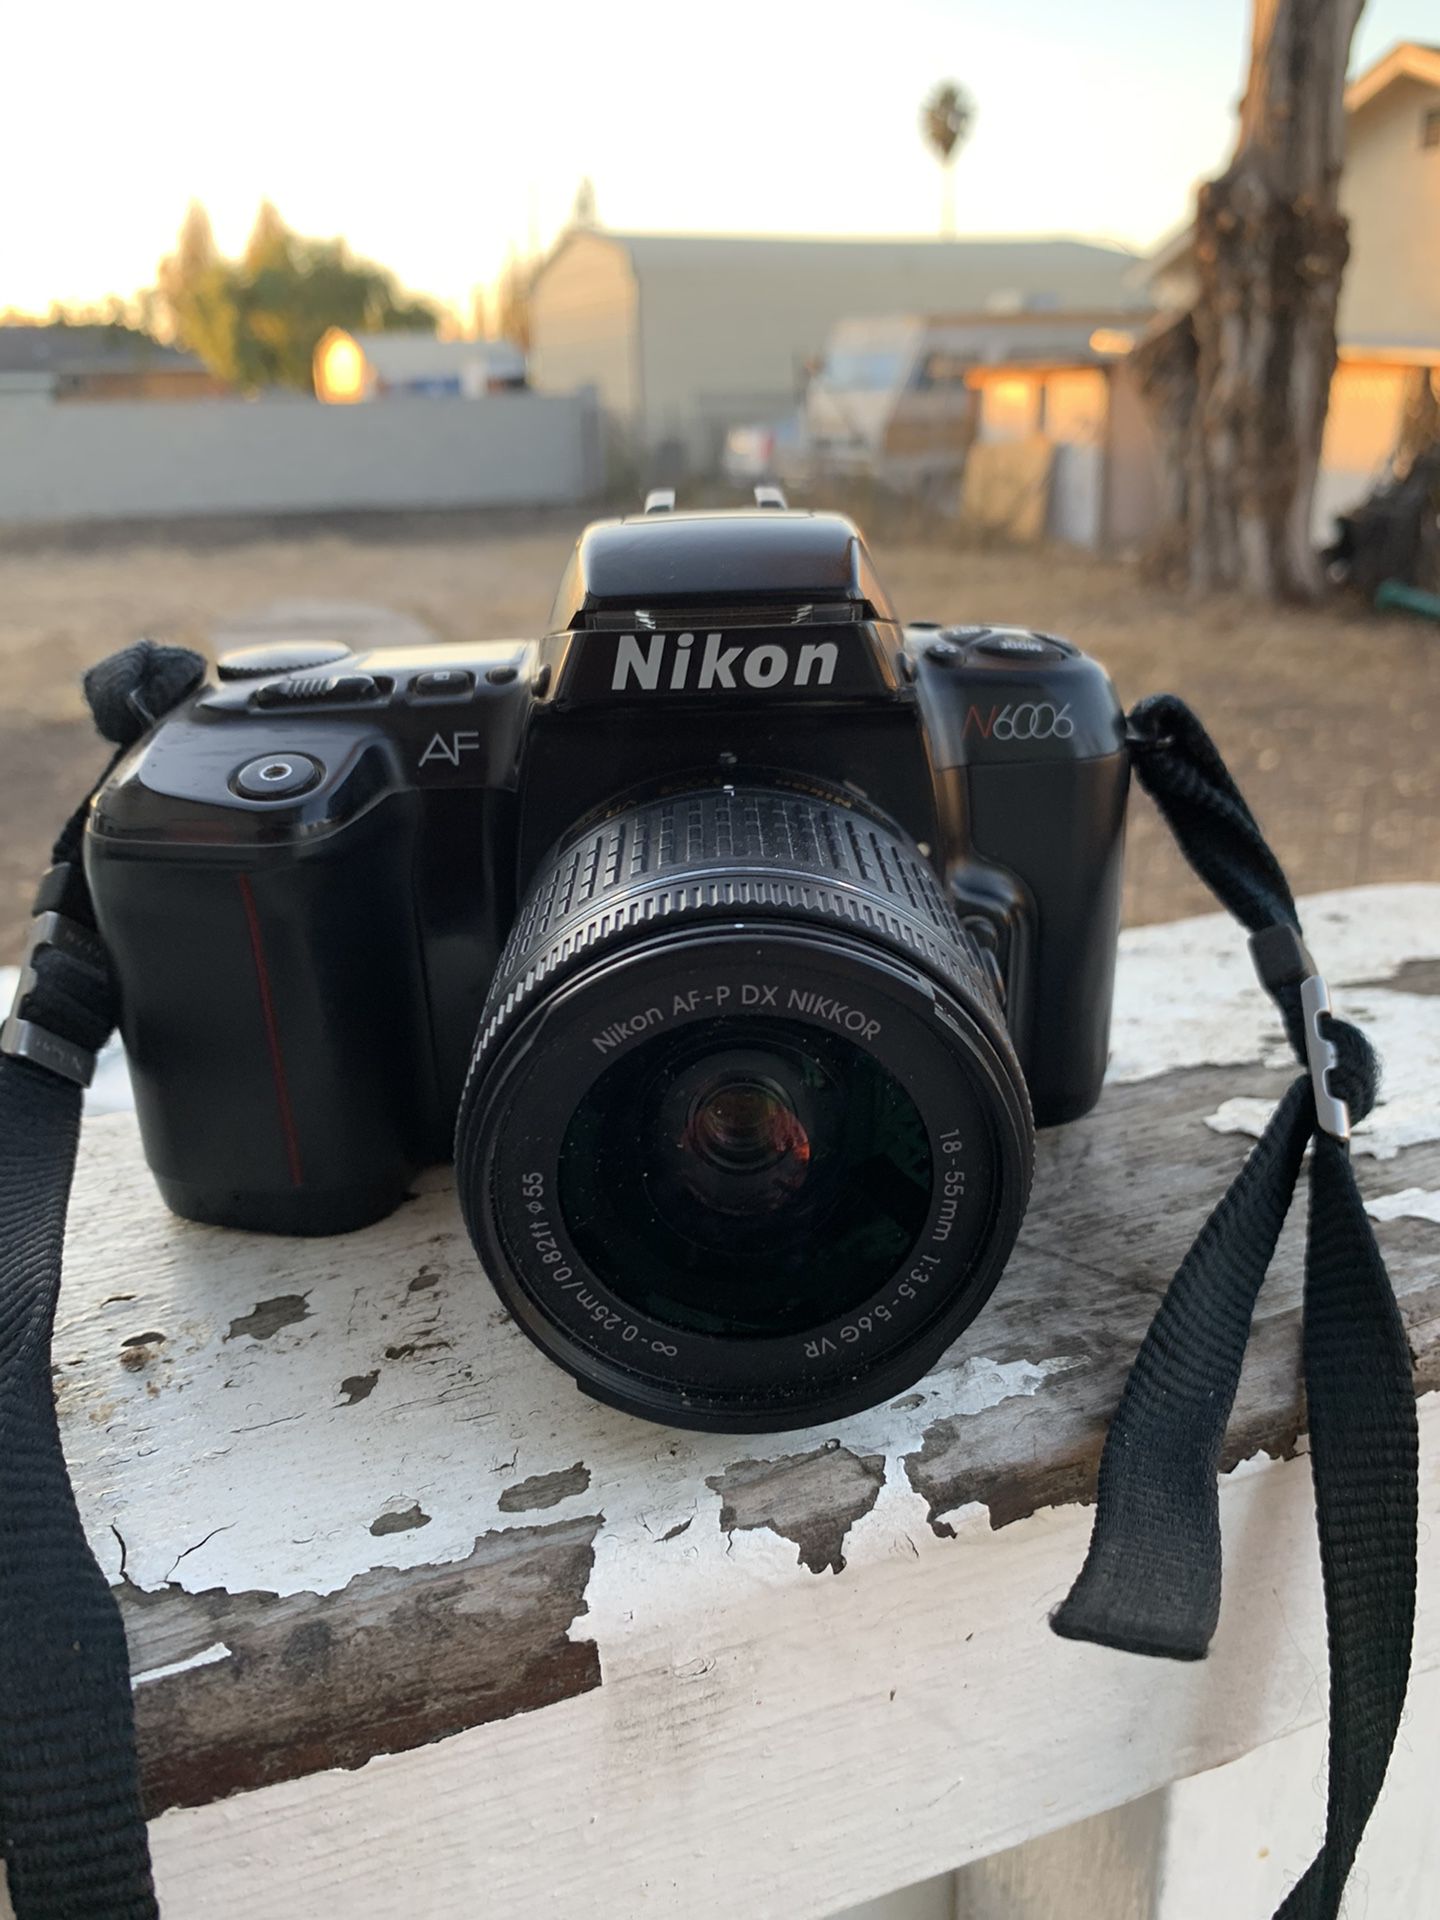 Nikon N6006 Film Camera